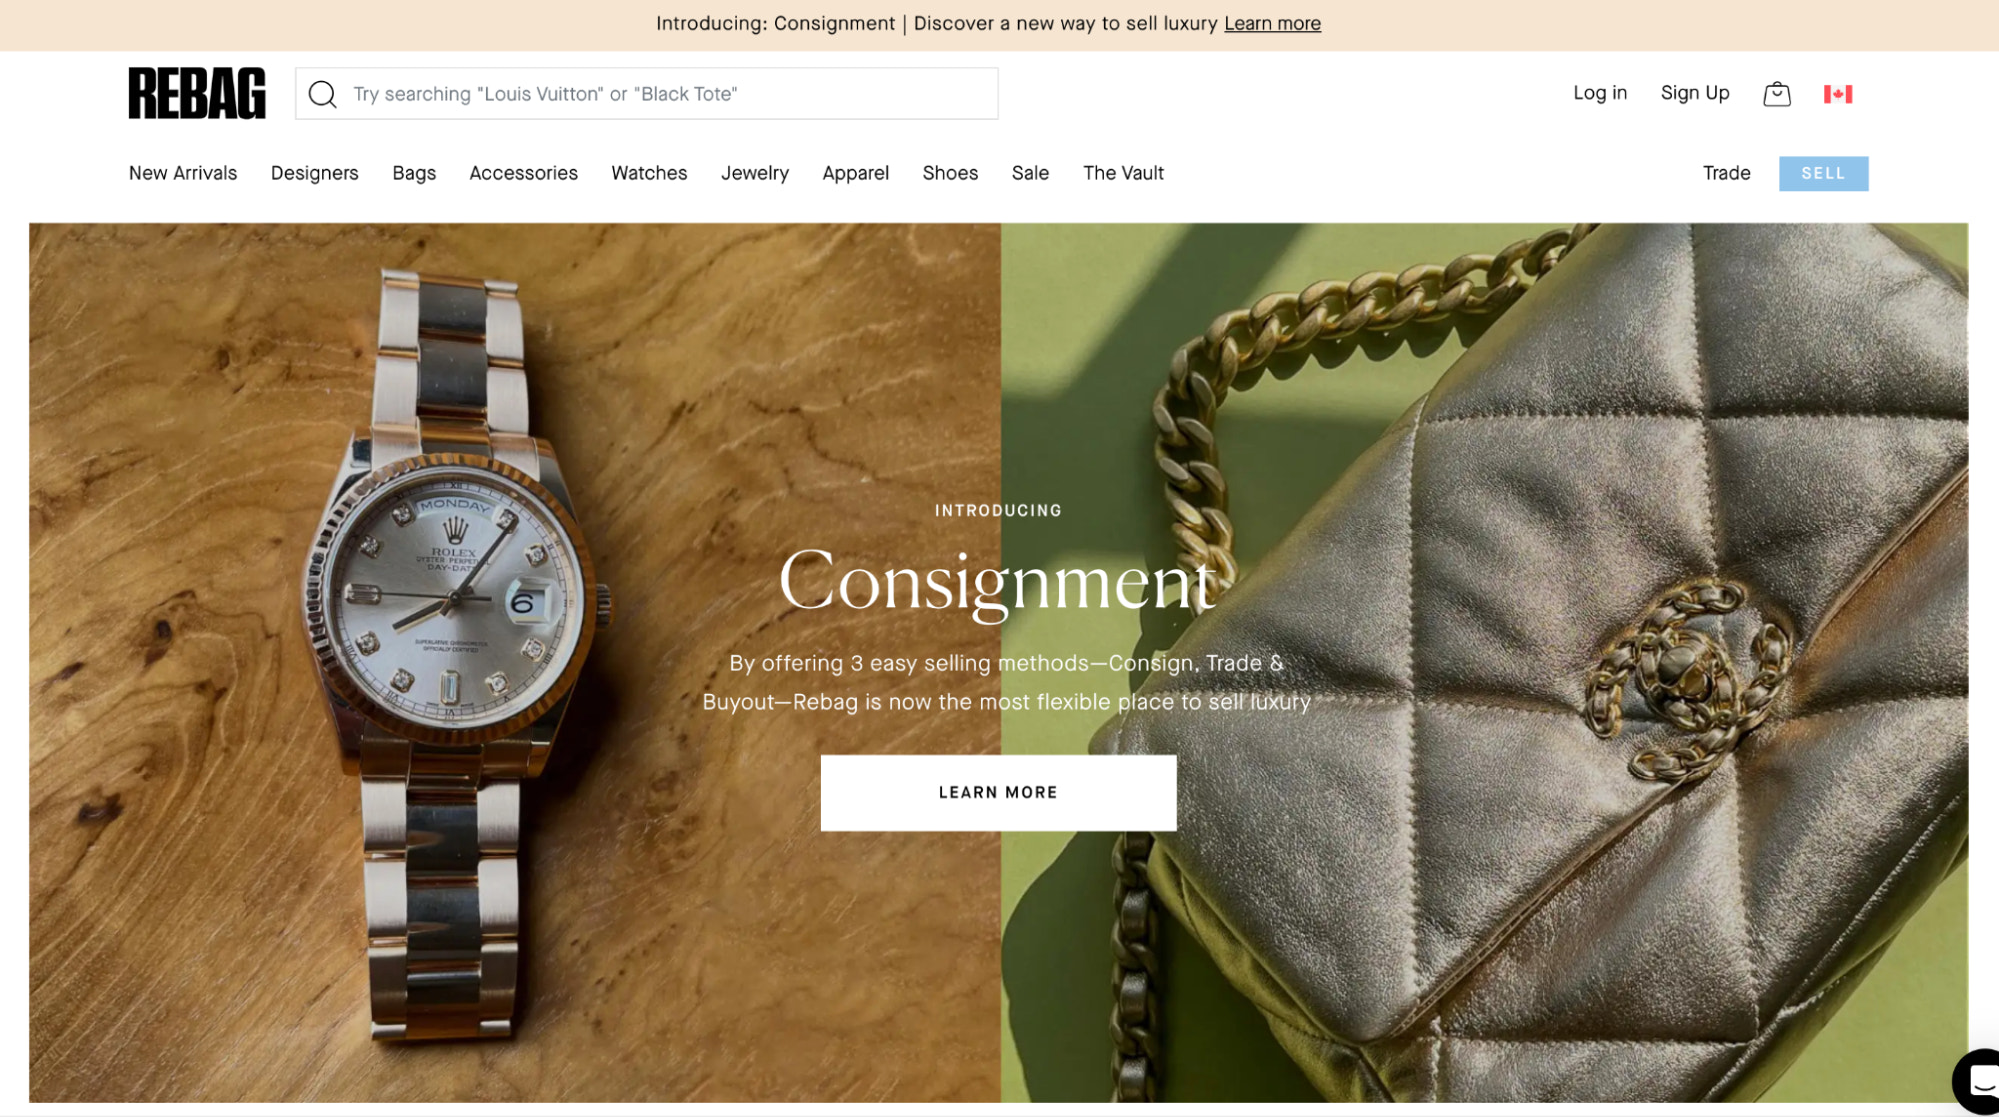 Rebag 寄售奢侈品商店主页，上面有劳力士手表和香奈儿手提包的图片。